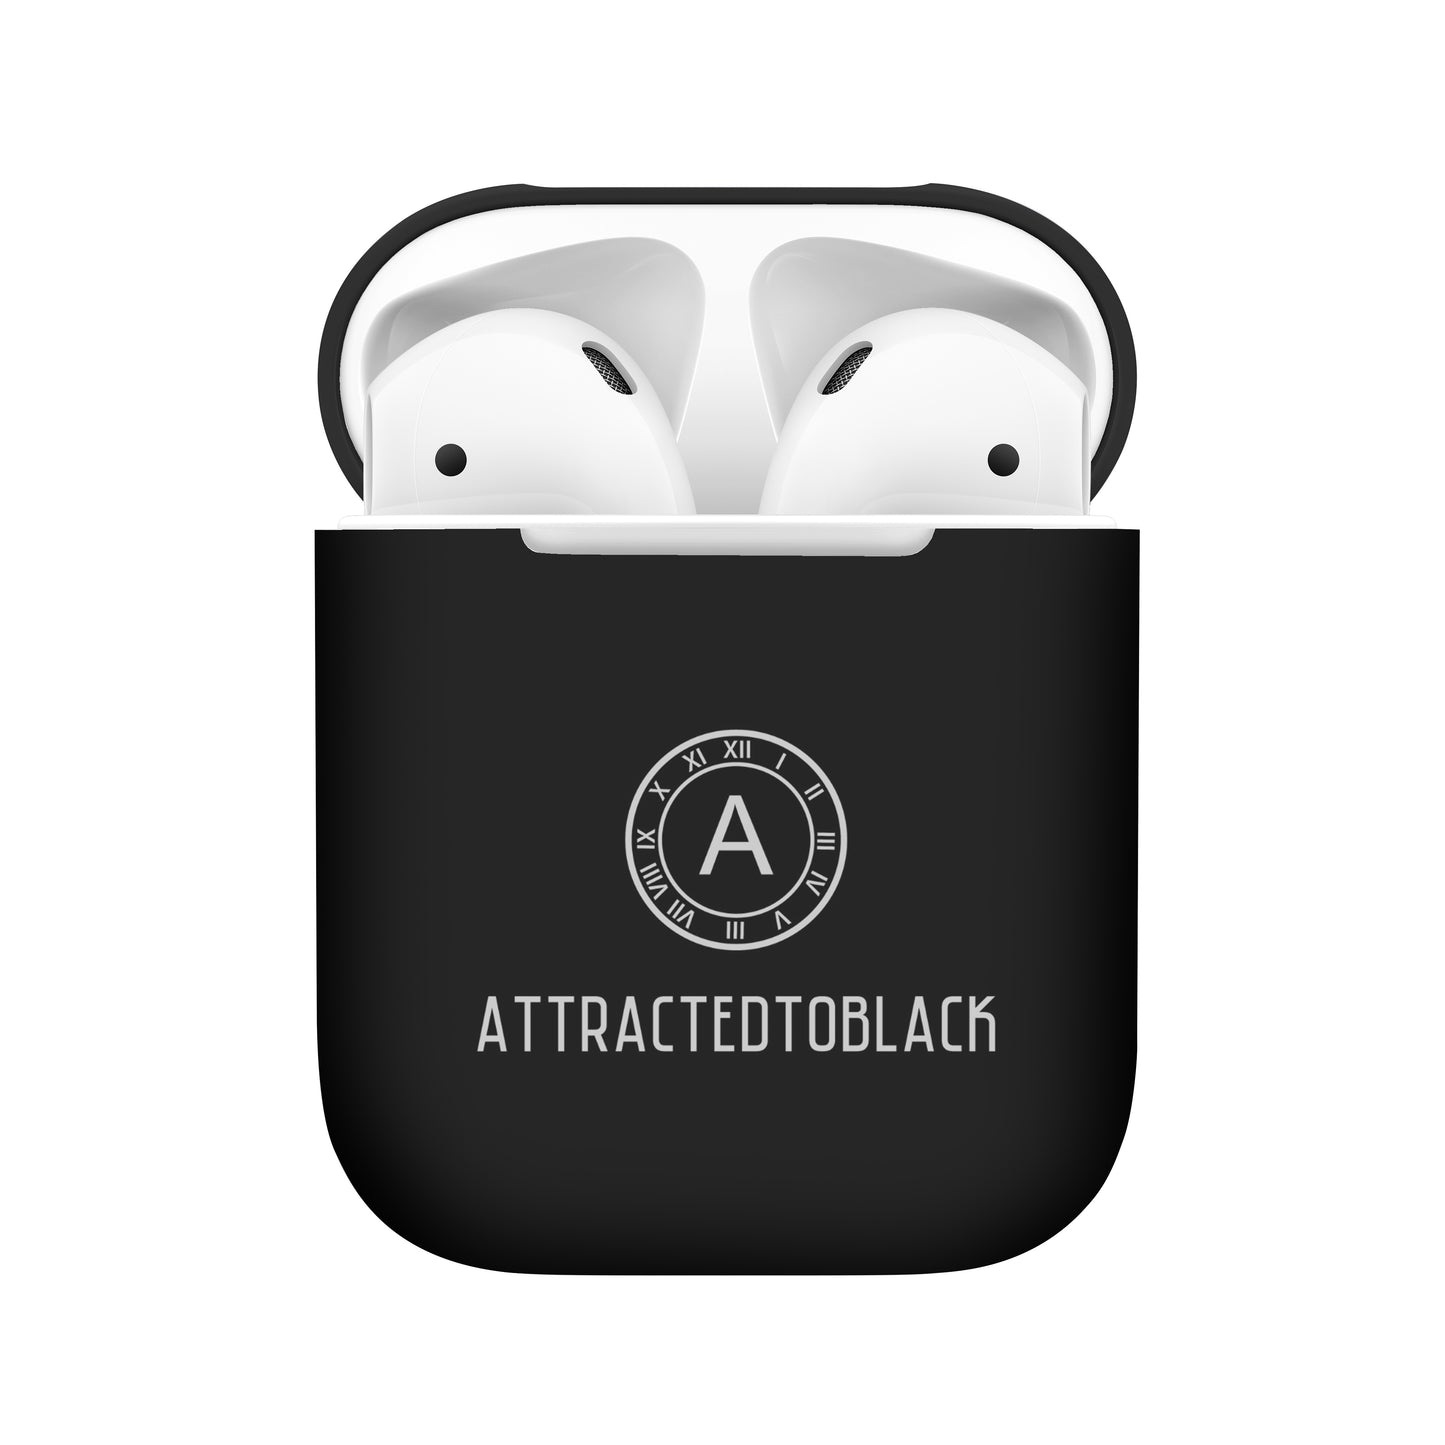 The ATB Case - Attractedtoblack